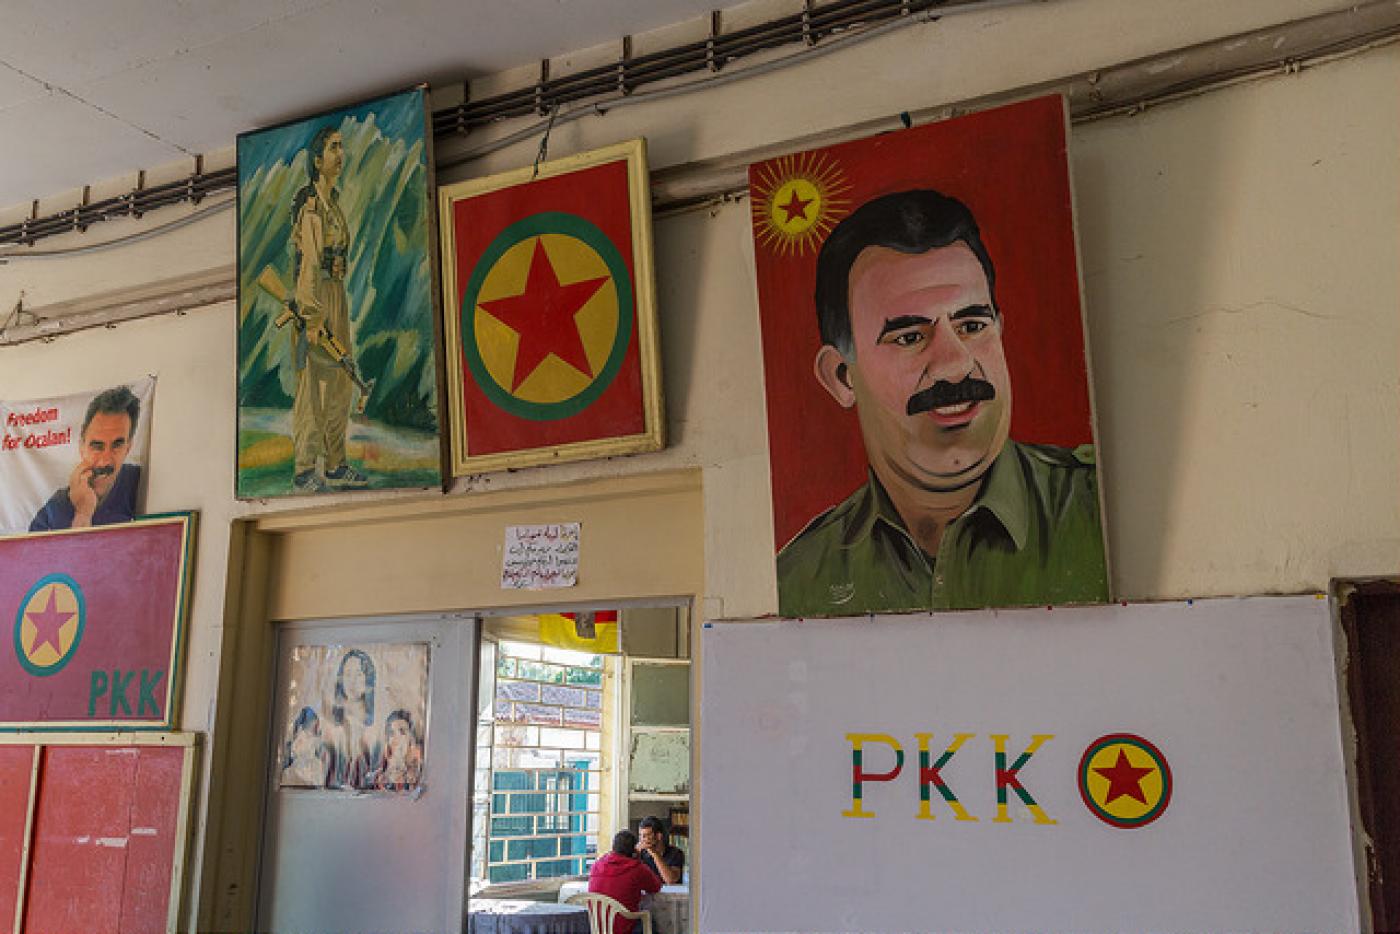 PKK: Ανακοινώνει την προσωρινή αναστολή των «επιχειρήσεών» του στην Τουρκία μετά το σεισμό